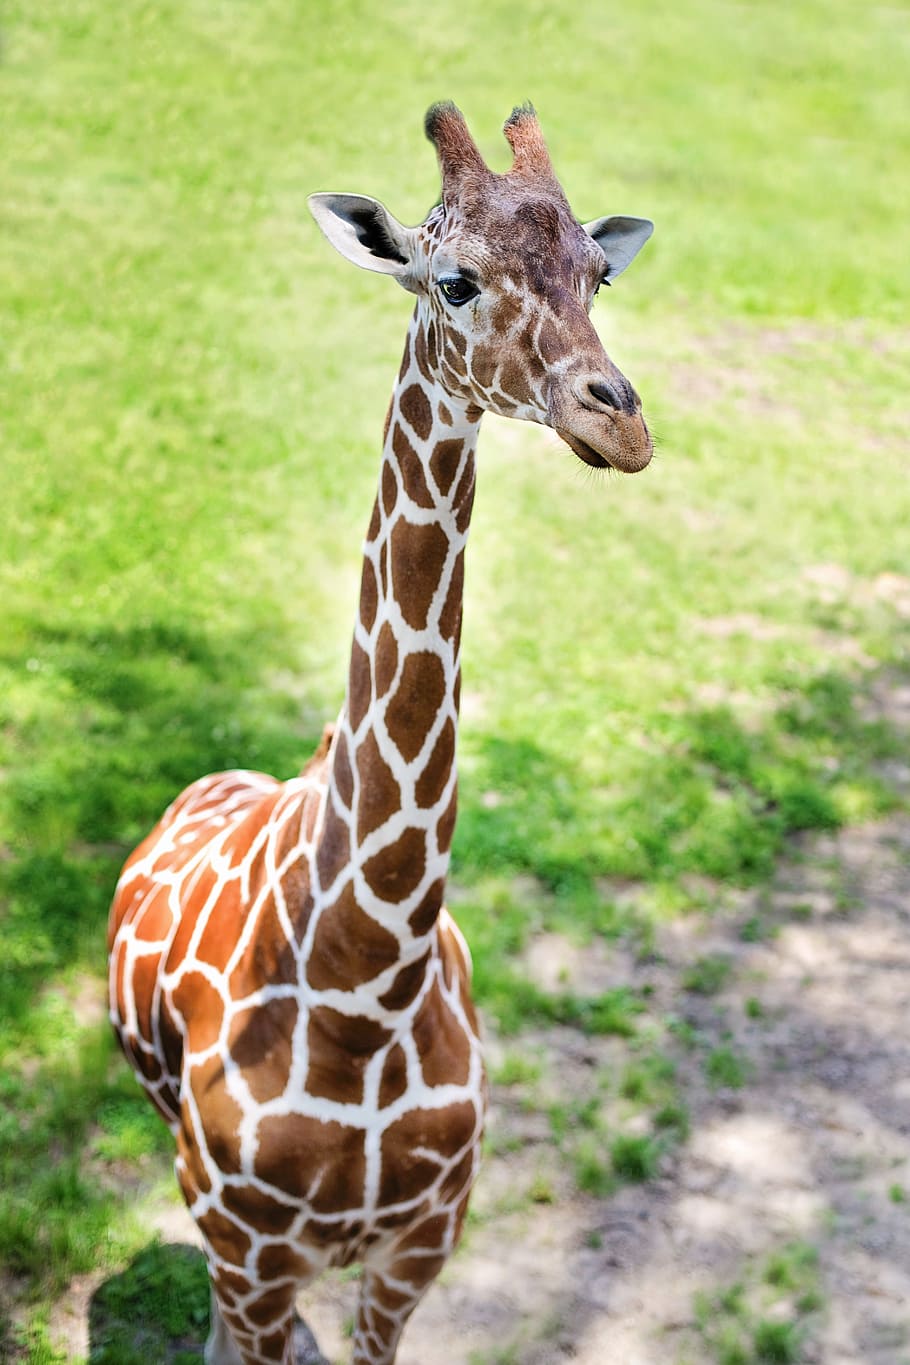 Baby giraffe 1080P, 2K, 4K, 5K HD wallpaper free download